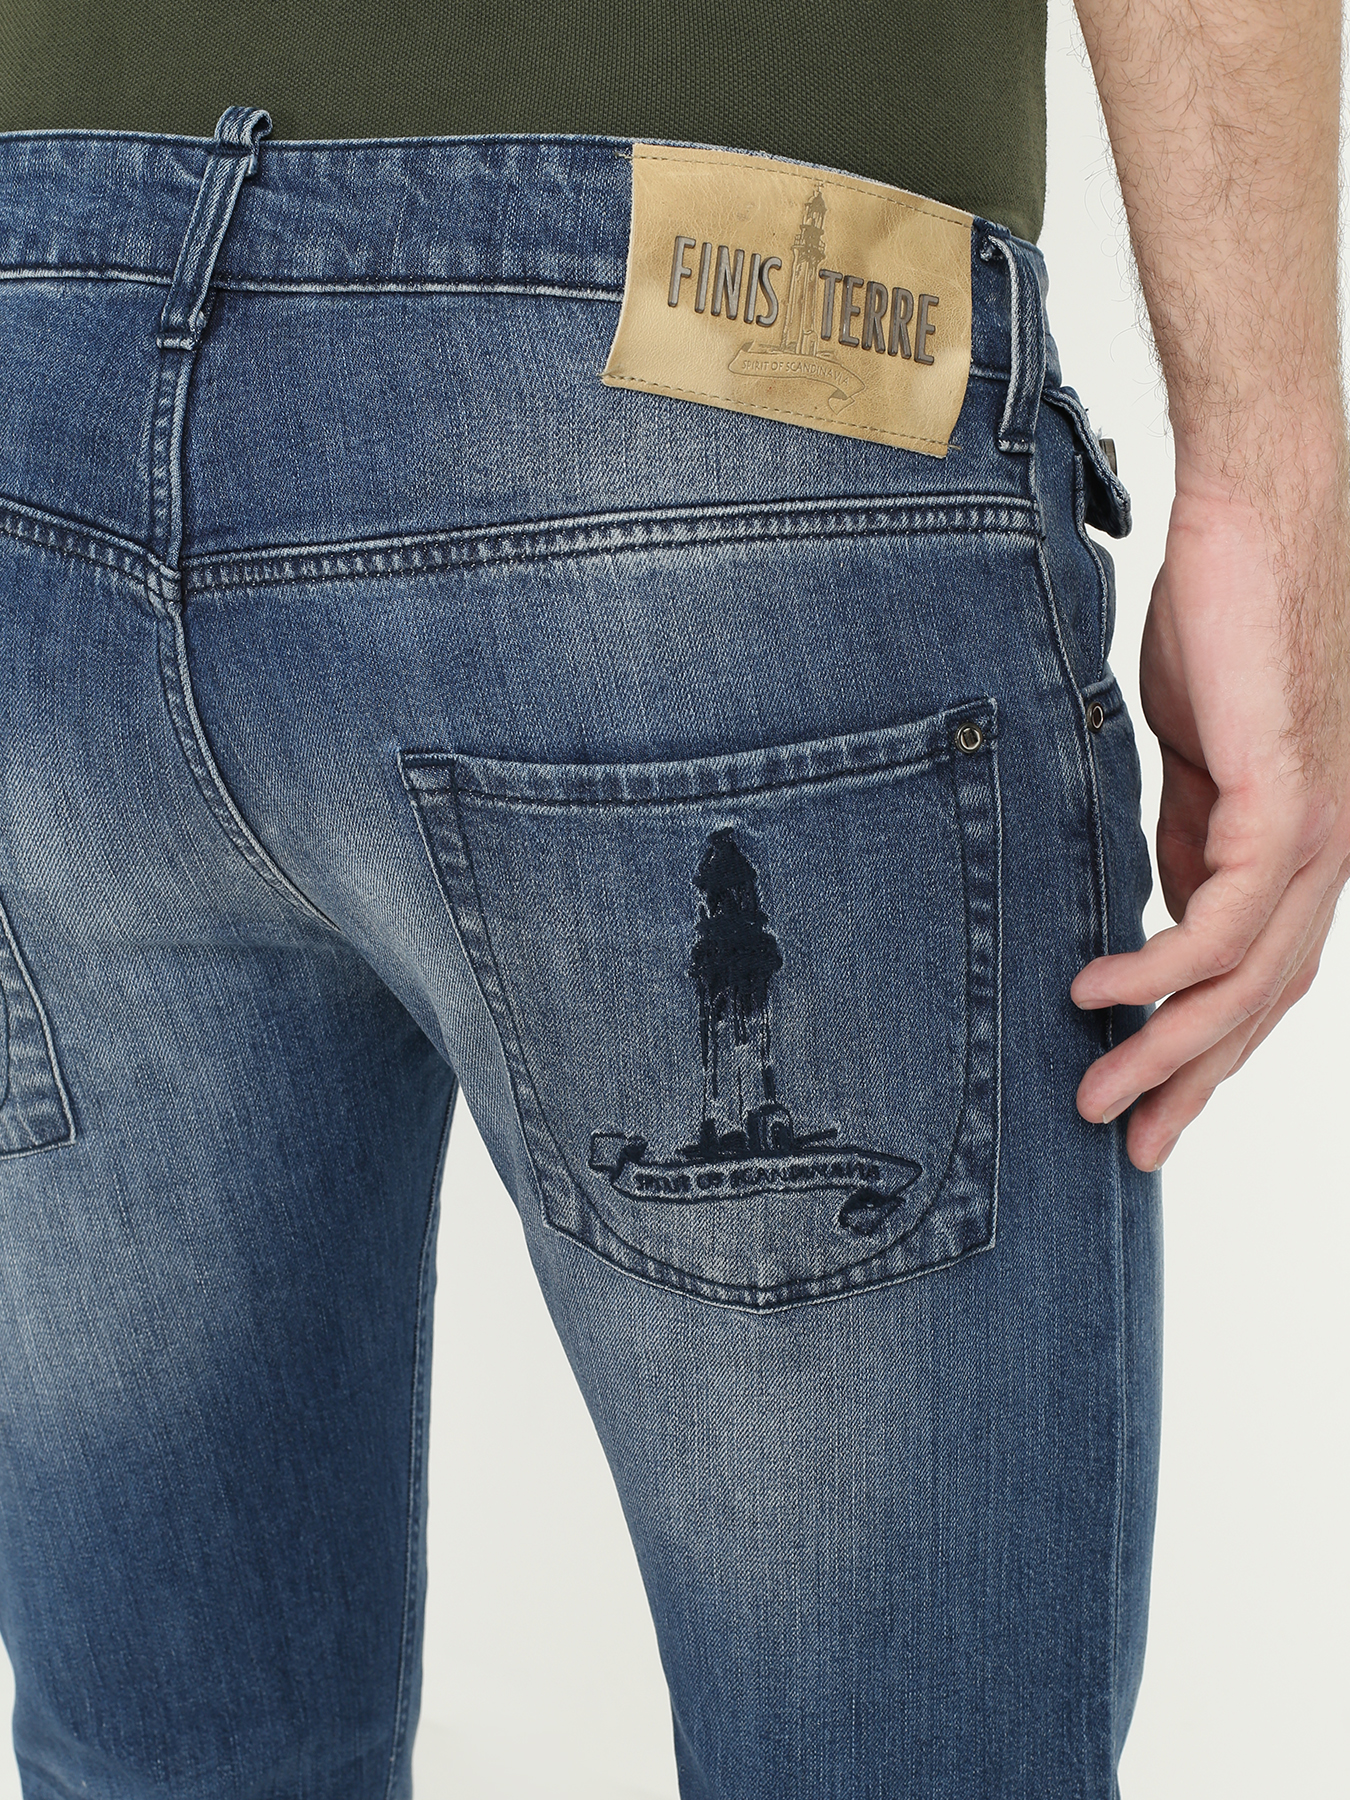 Finisterre Узкие мужские джинсы 323200-016 Фото 4